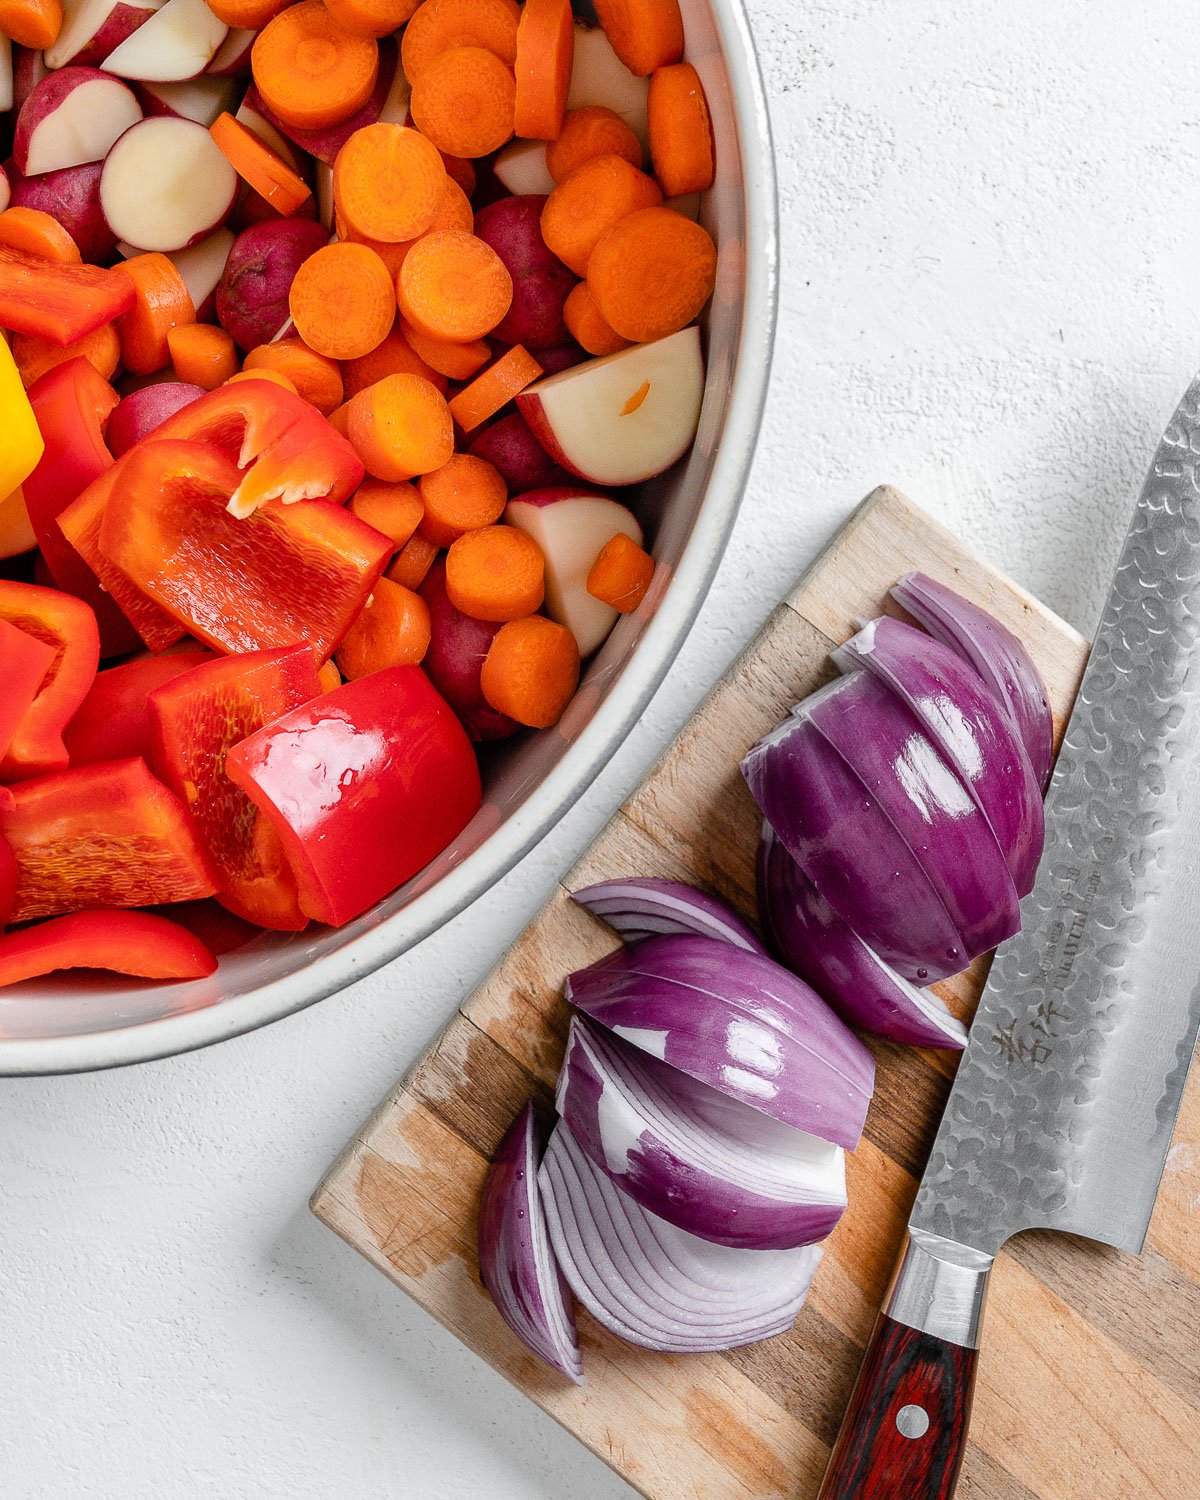 post slicing onions on cutting board alongside bowl of veggies